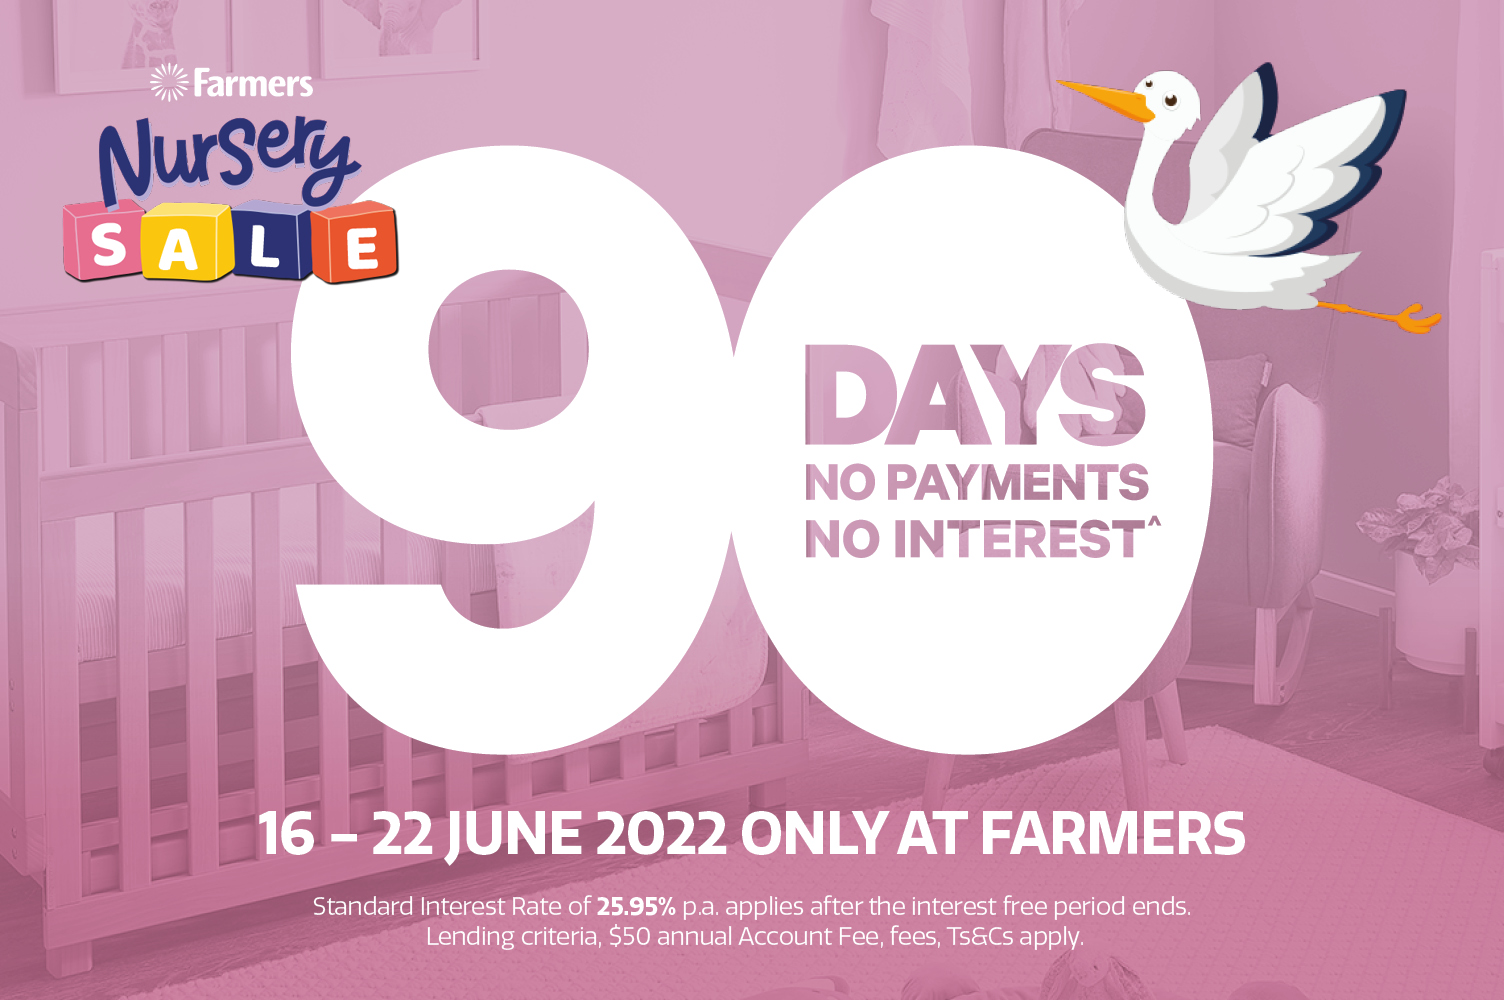 Enjoy 90 Days no payments no interest at Farmers Nursery Sale 16-22 June 2022